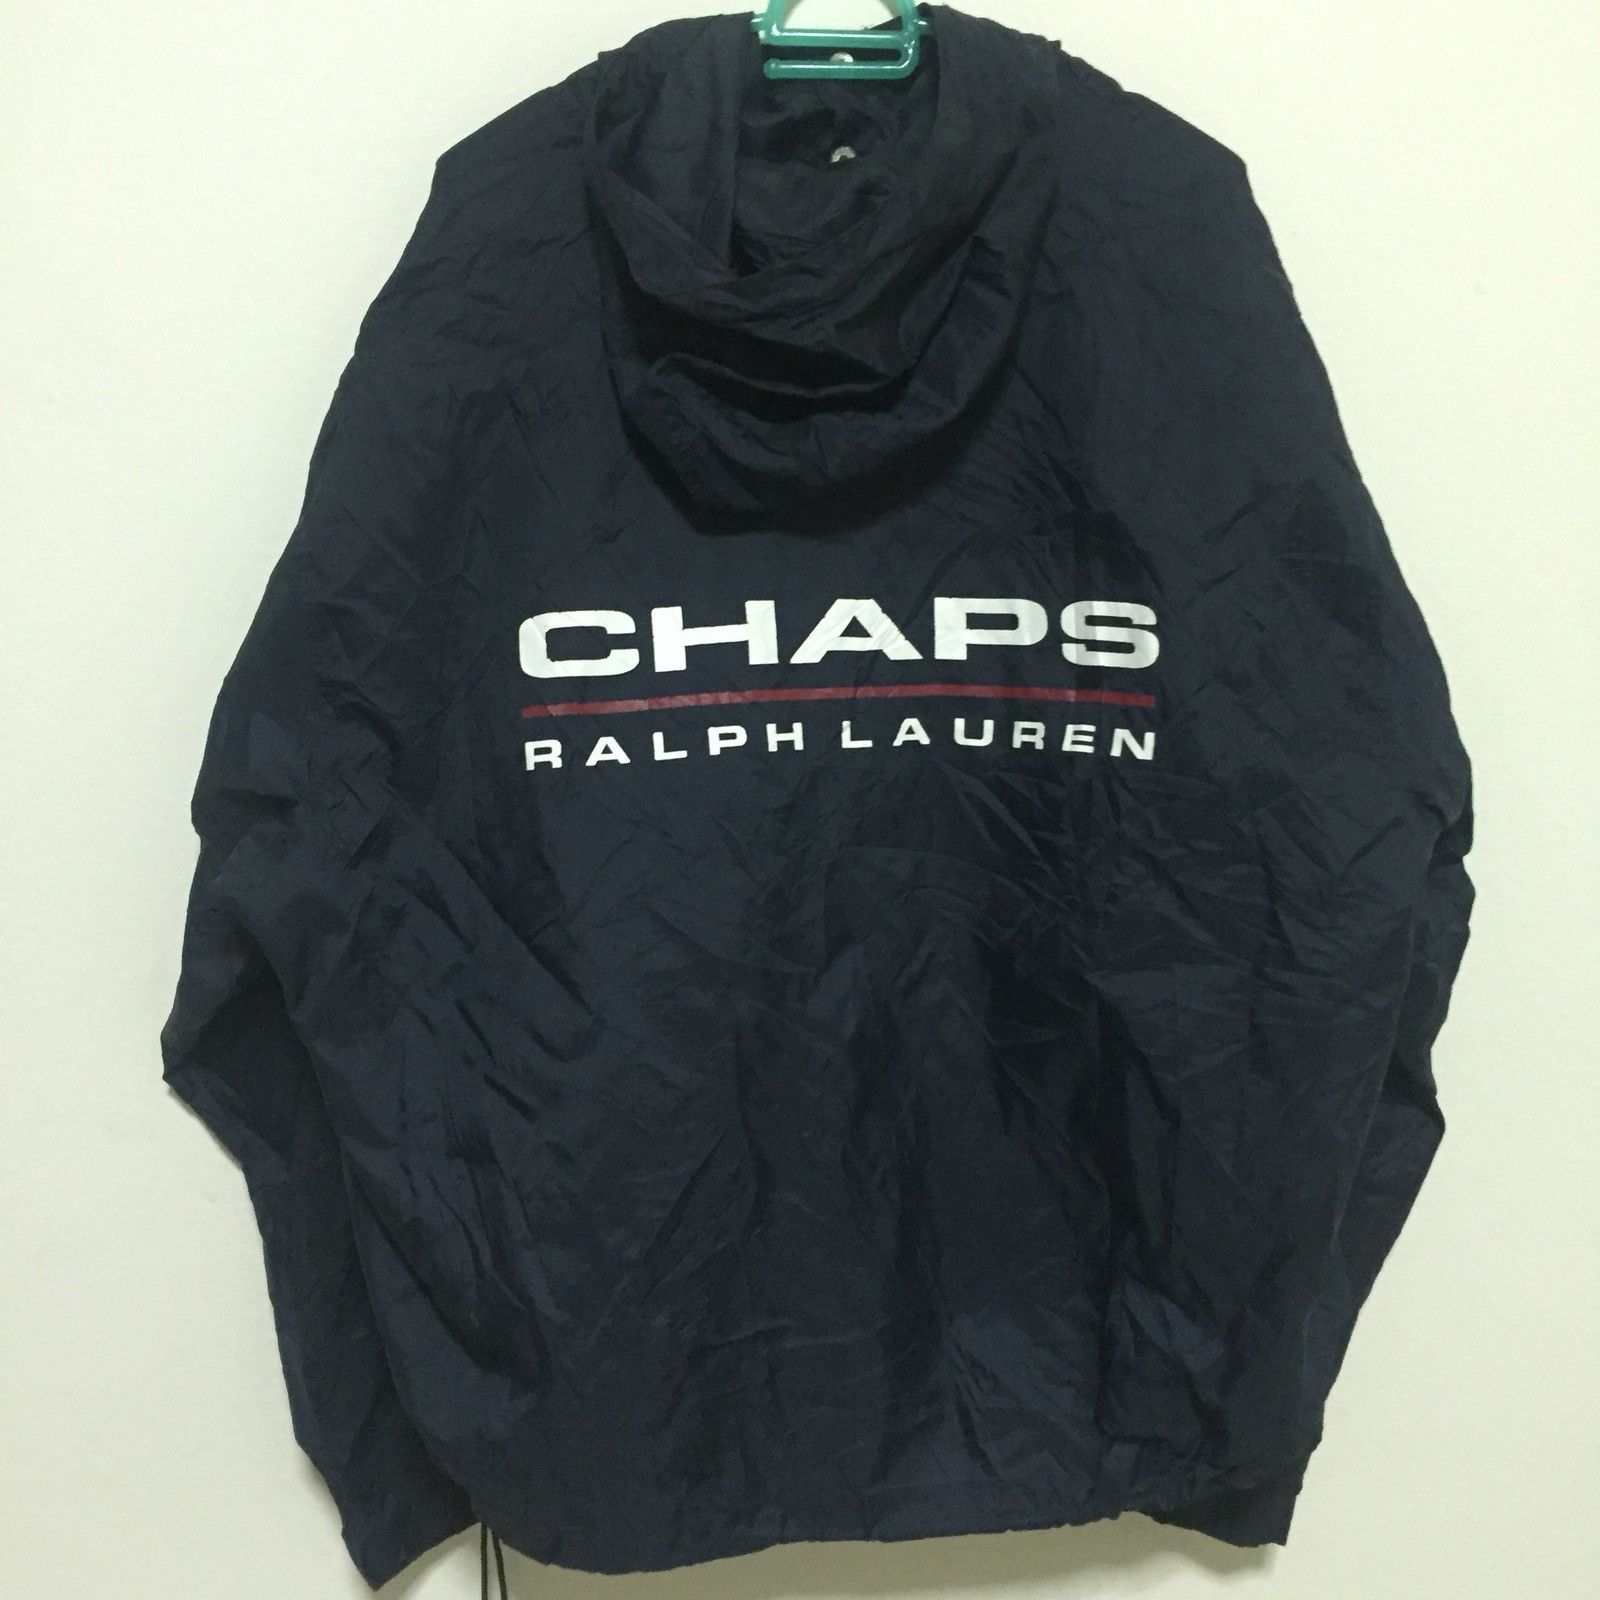 Chaps Ralph Lauren - Vintage 90s Chaps by Ralph lauren windbreaker pullover hoodie spell out Size M/XL - 2